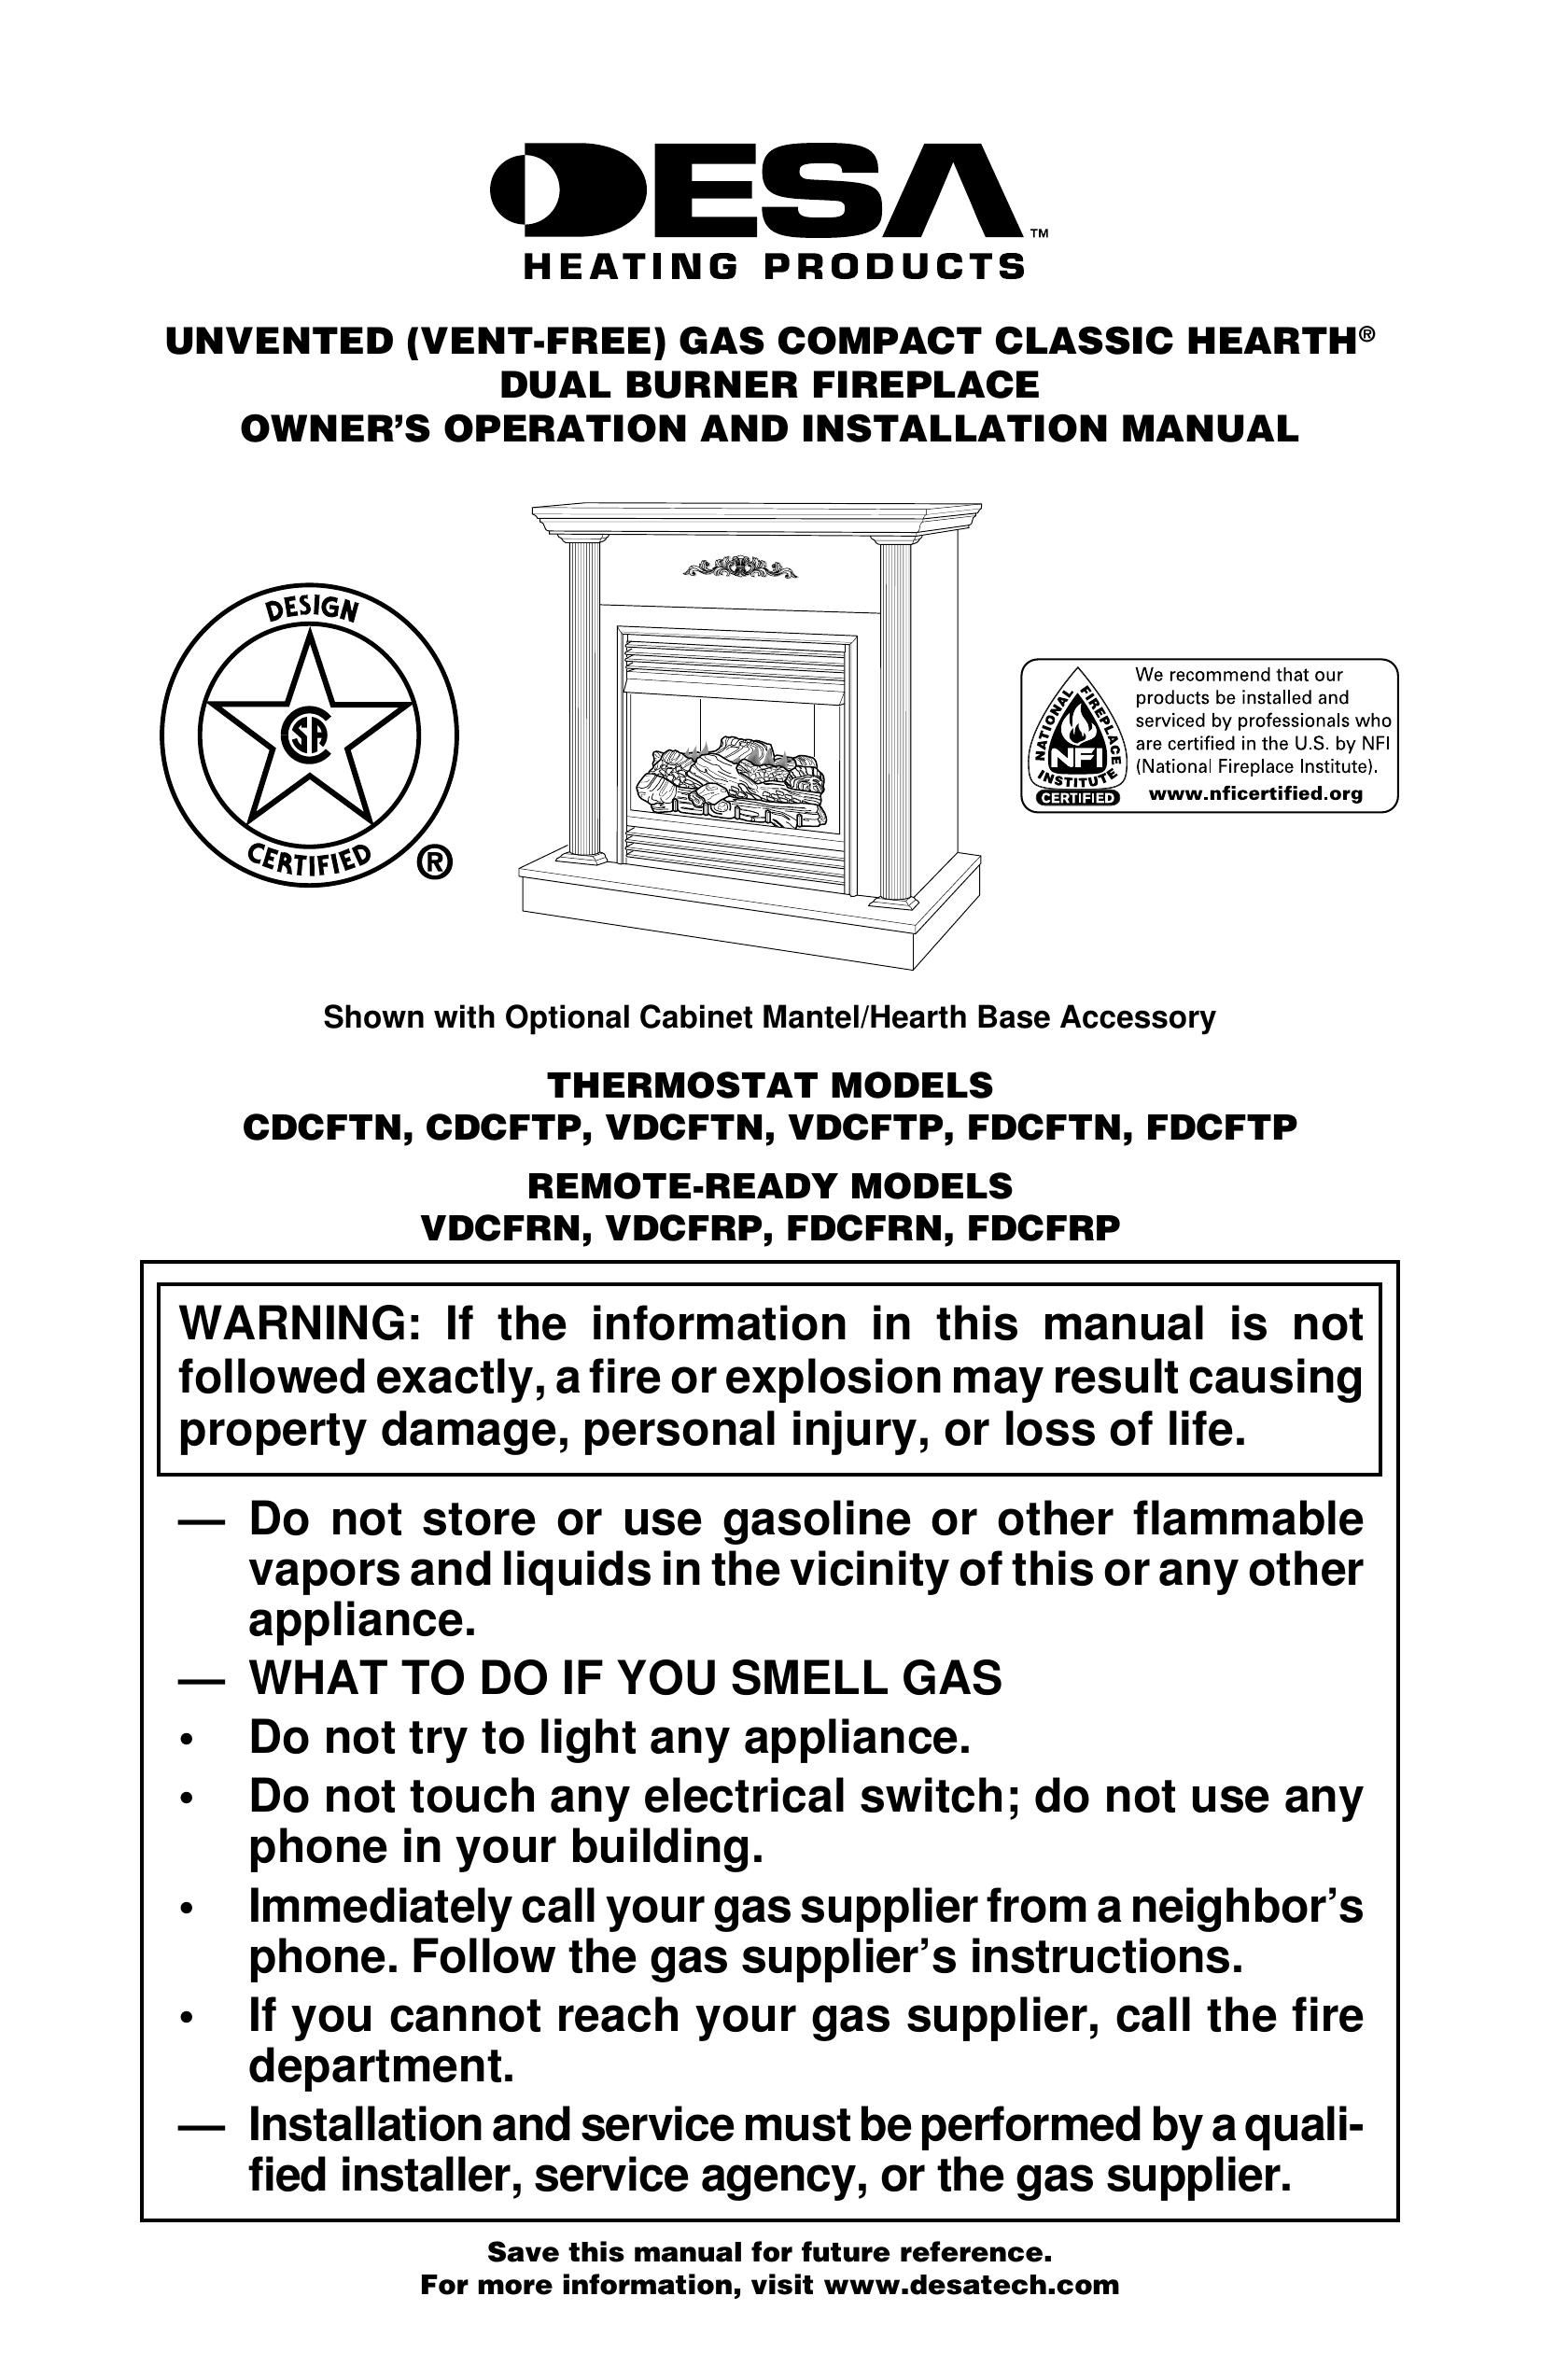 Desa CDCFTN Fire Pit User Manual